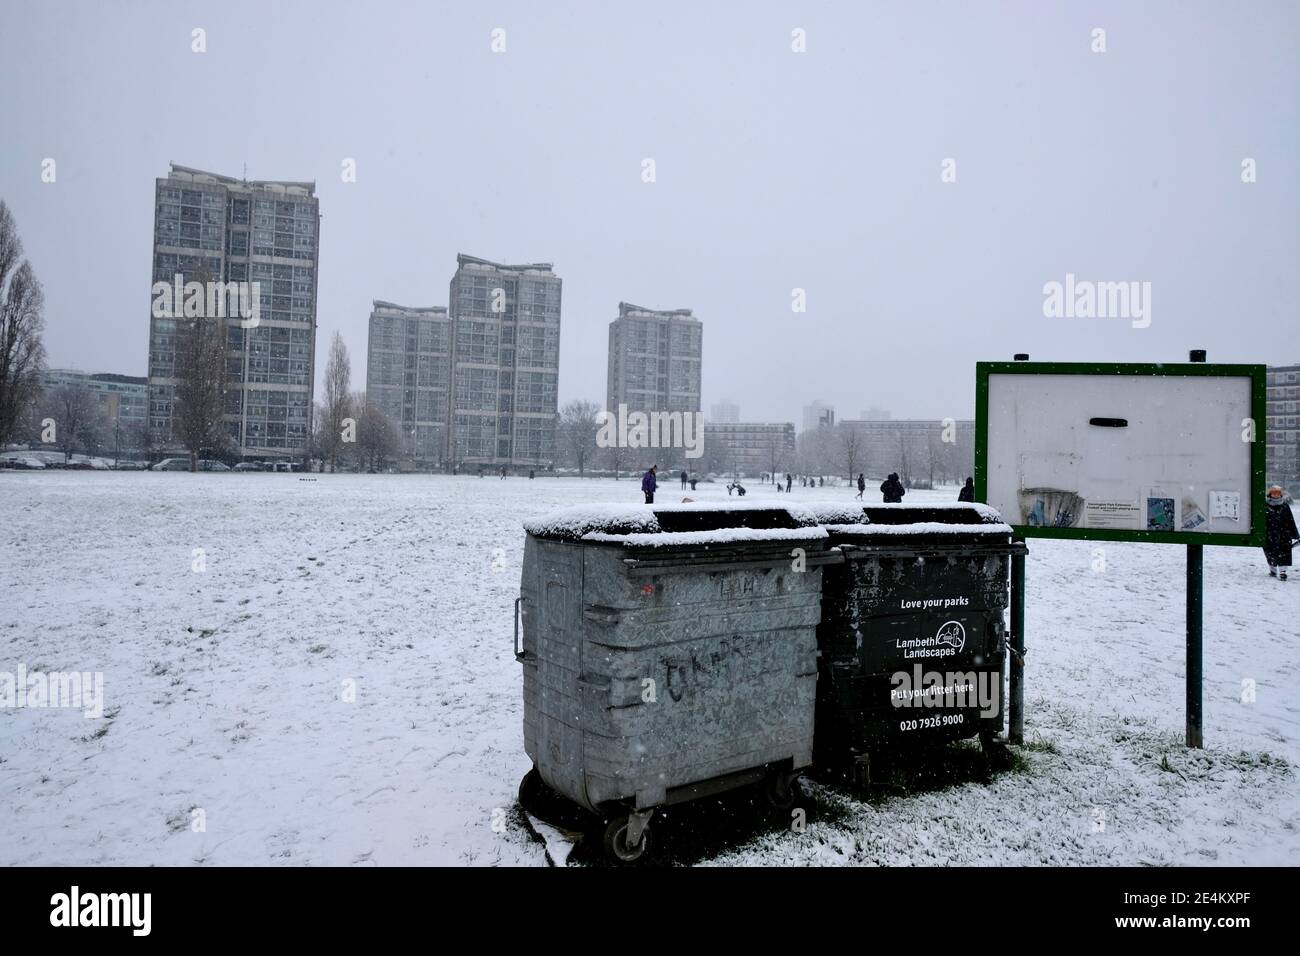 Kennington Park, London, UK. 24th January 2021. Kennington Park sports ground is heavily covered in snow. London, UK. Credit: Harrison Hodgkins/Alamy Live News. Stock Photo